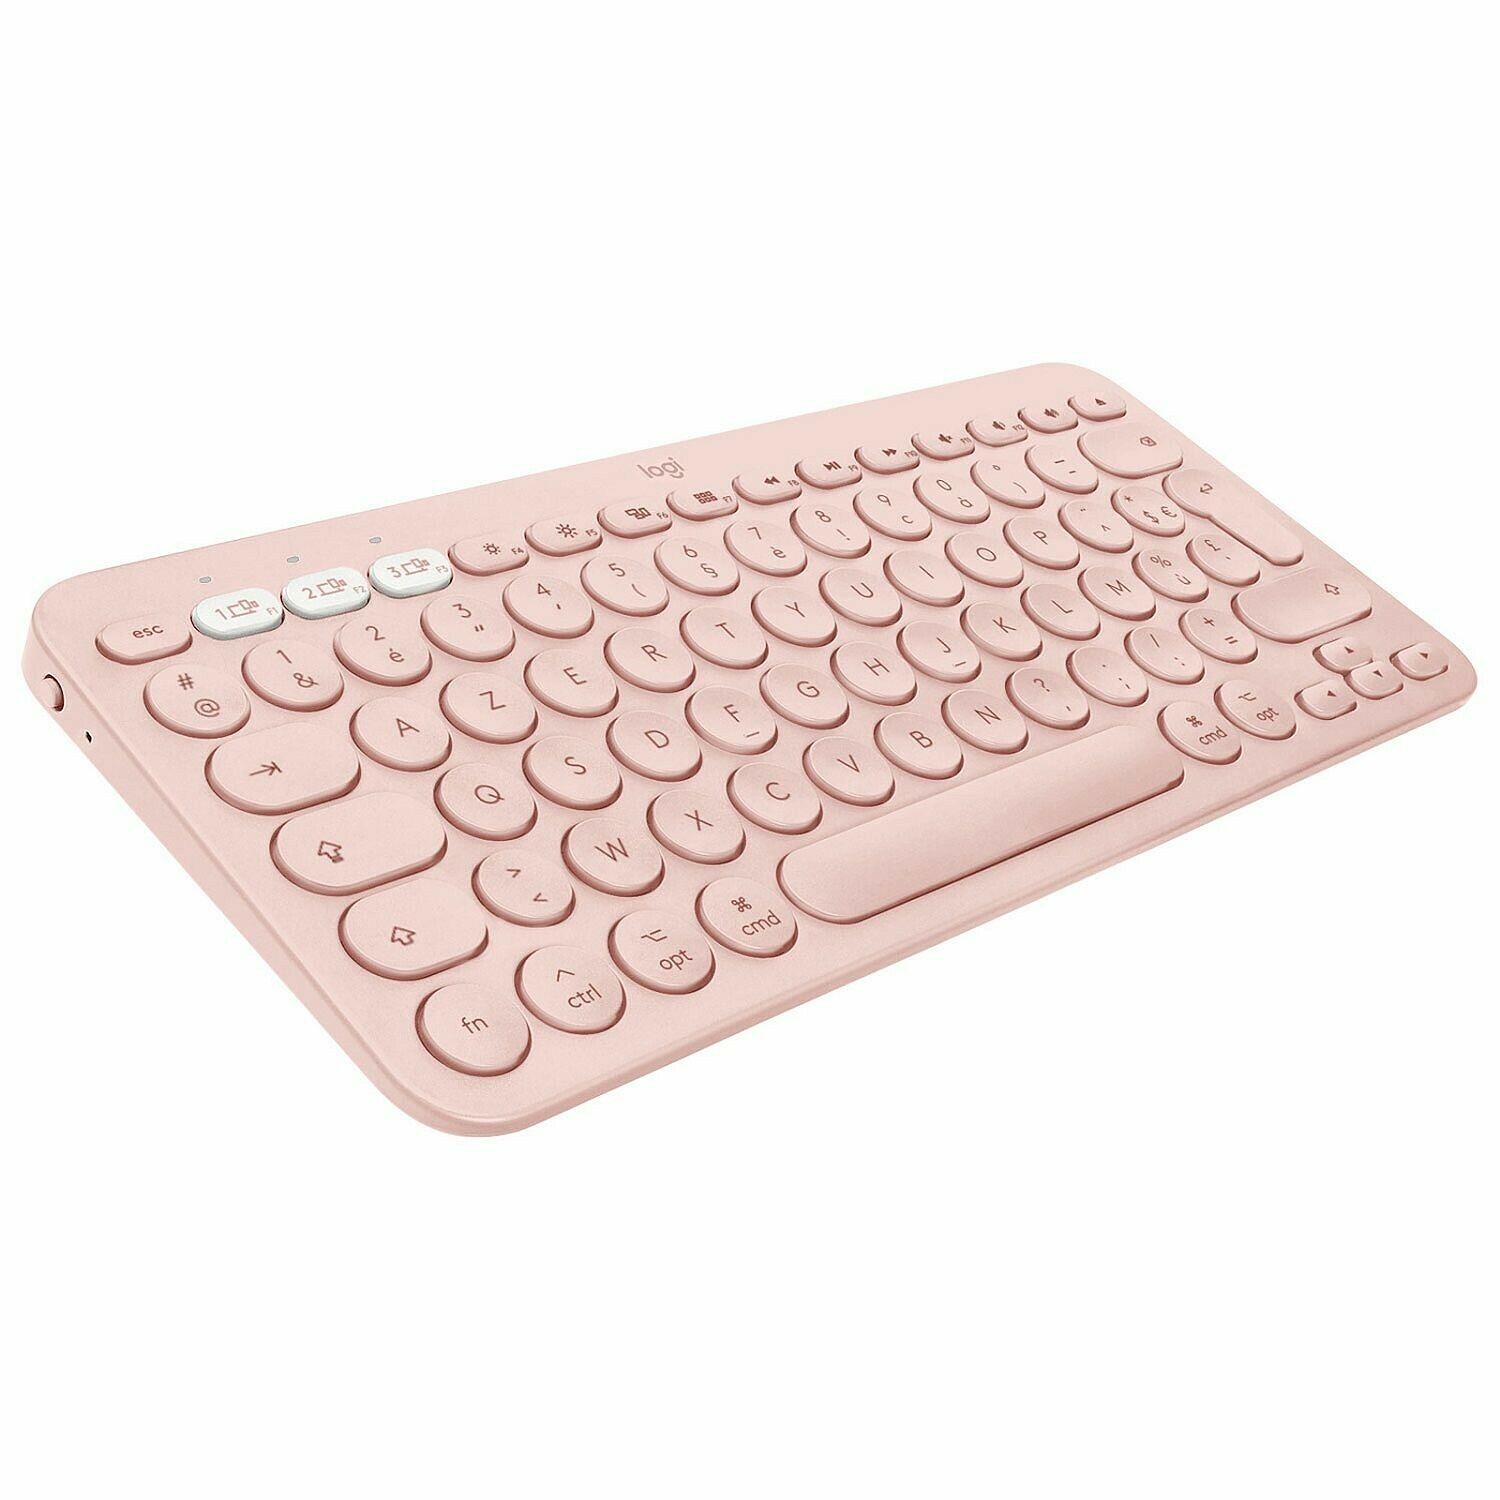 Logitech K380 Multi-Device Bluetooth Keyboard for Mac (Rose) (image:2)